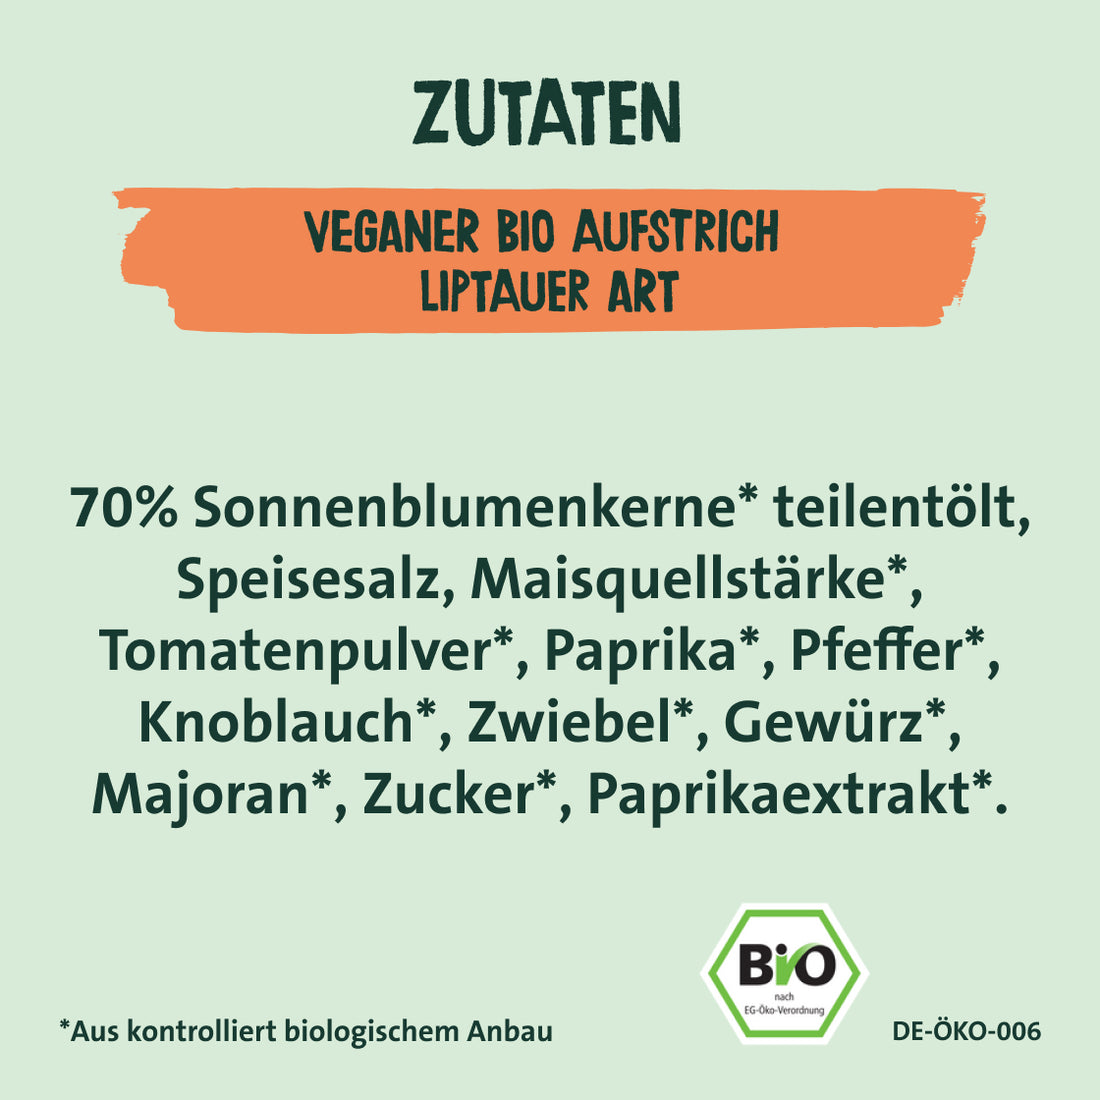 Vegan organic spread according to Liptauer style